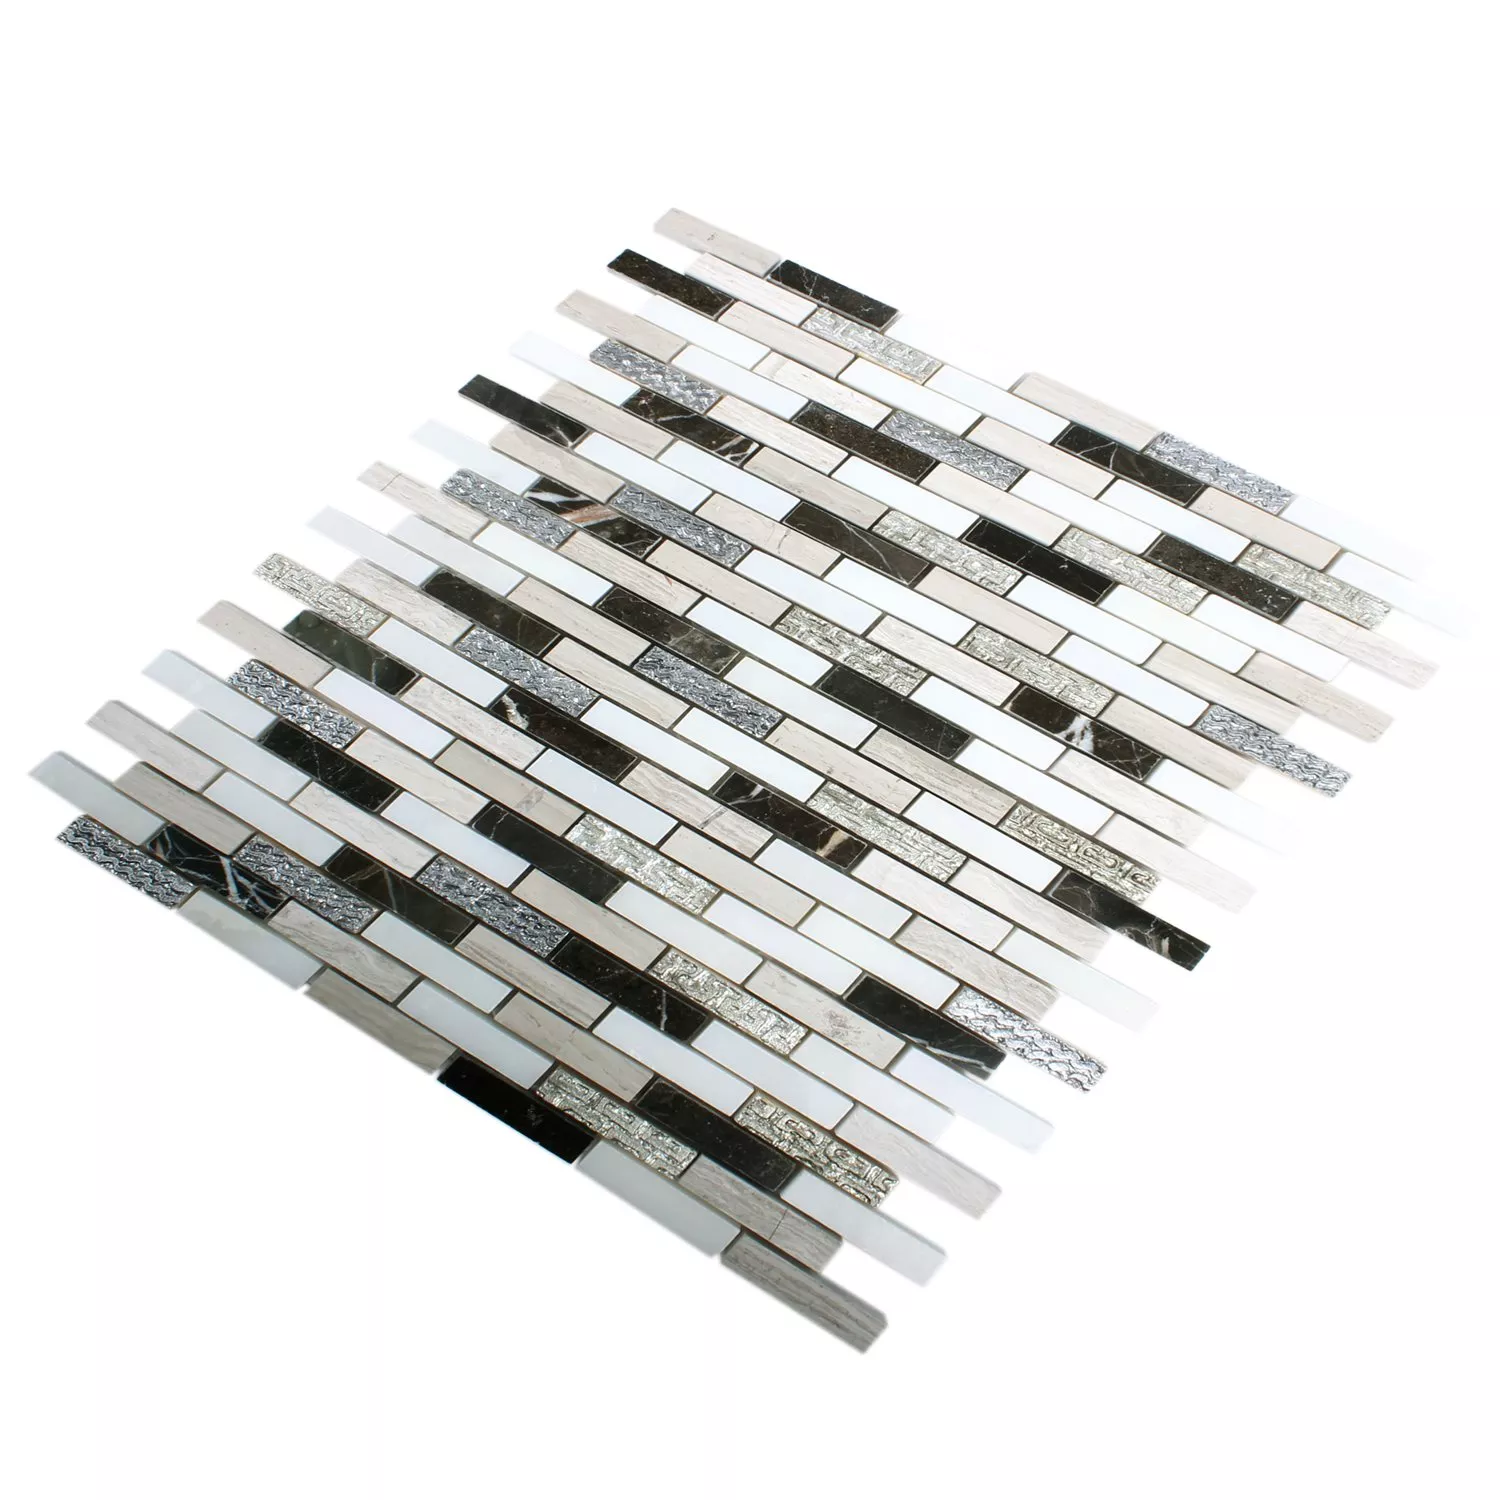 Sample Mosaic Tiles Sicilia Silver Brown White Grey Brick